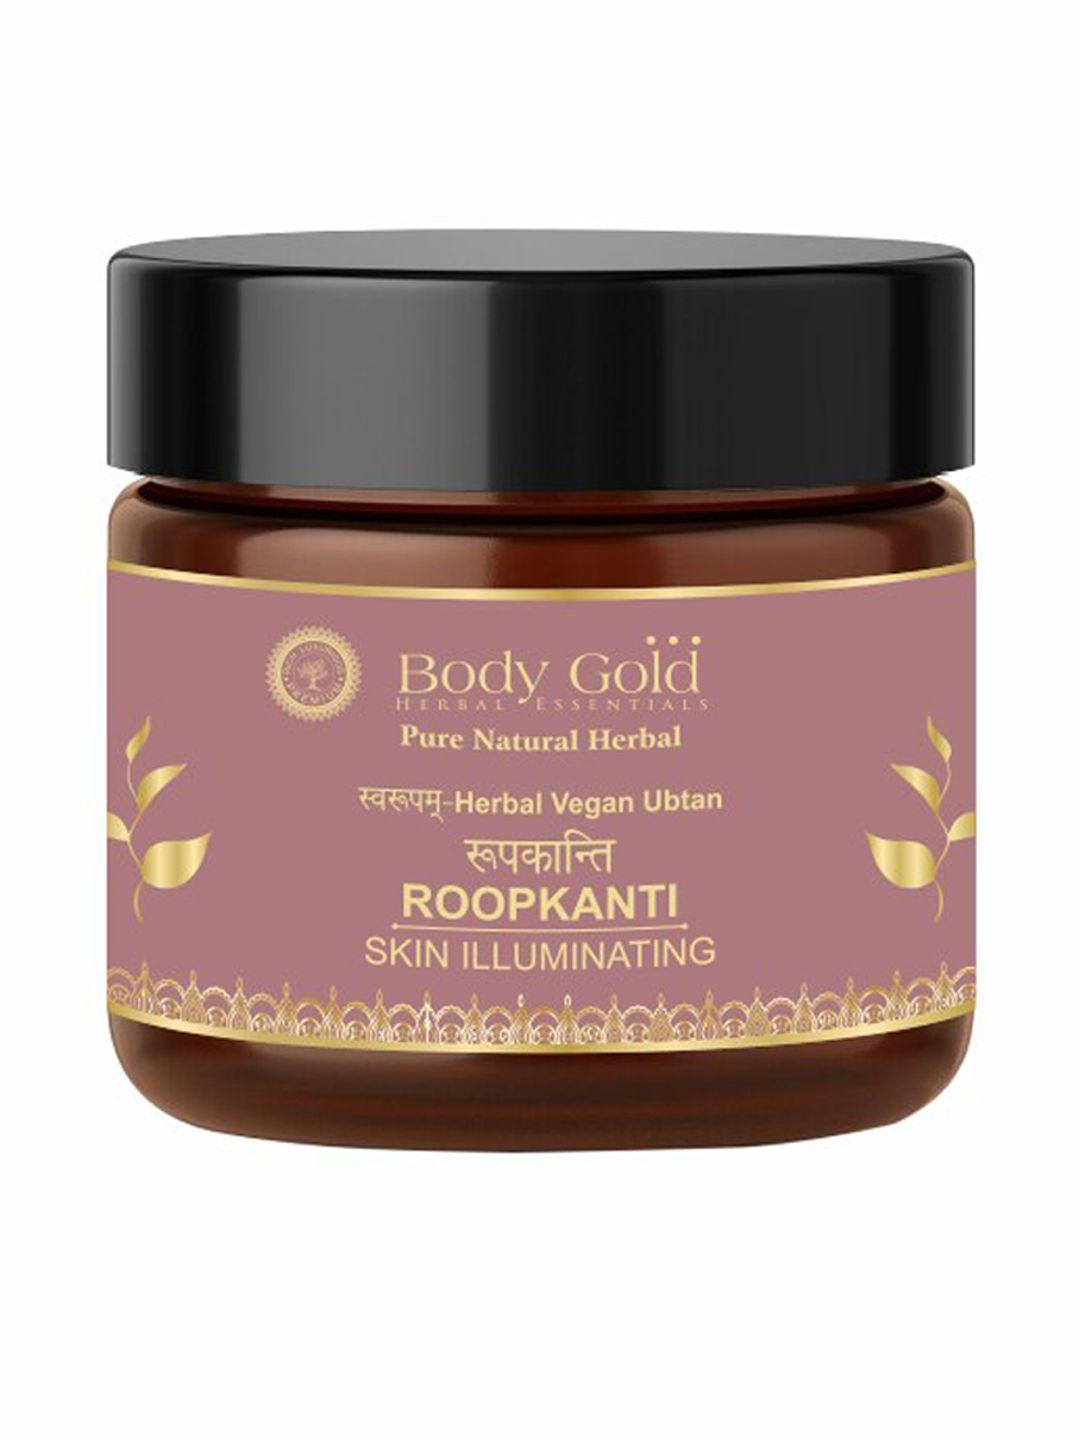 body gold herbal vegan ubtan roopkanti skin illuminating face mask - 100g